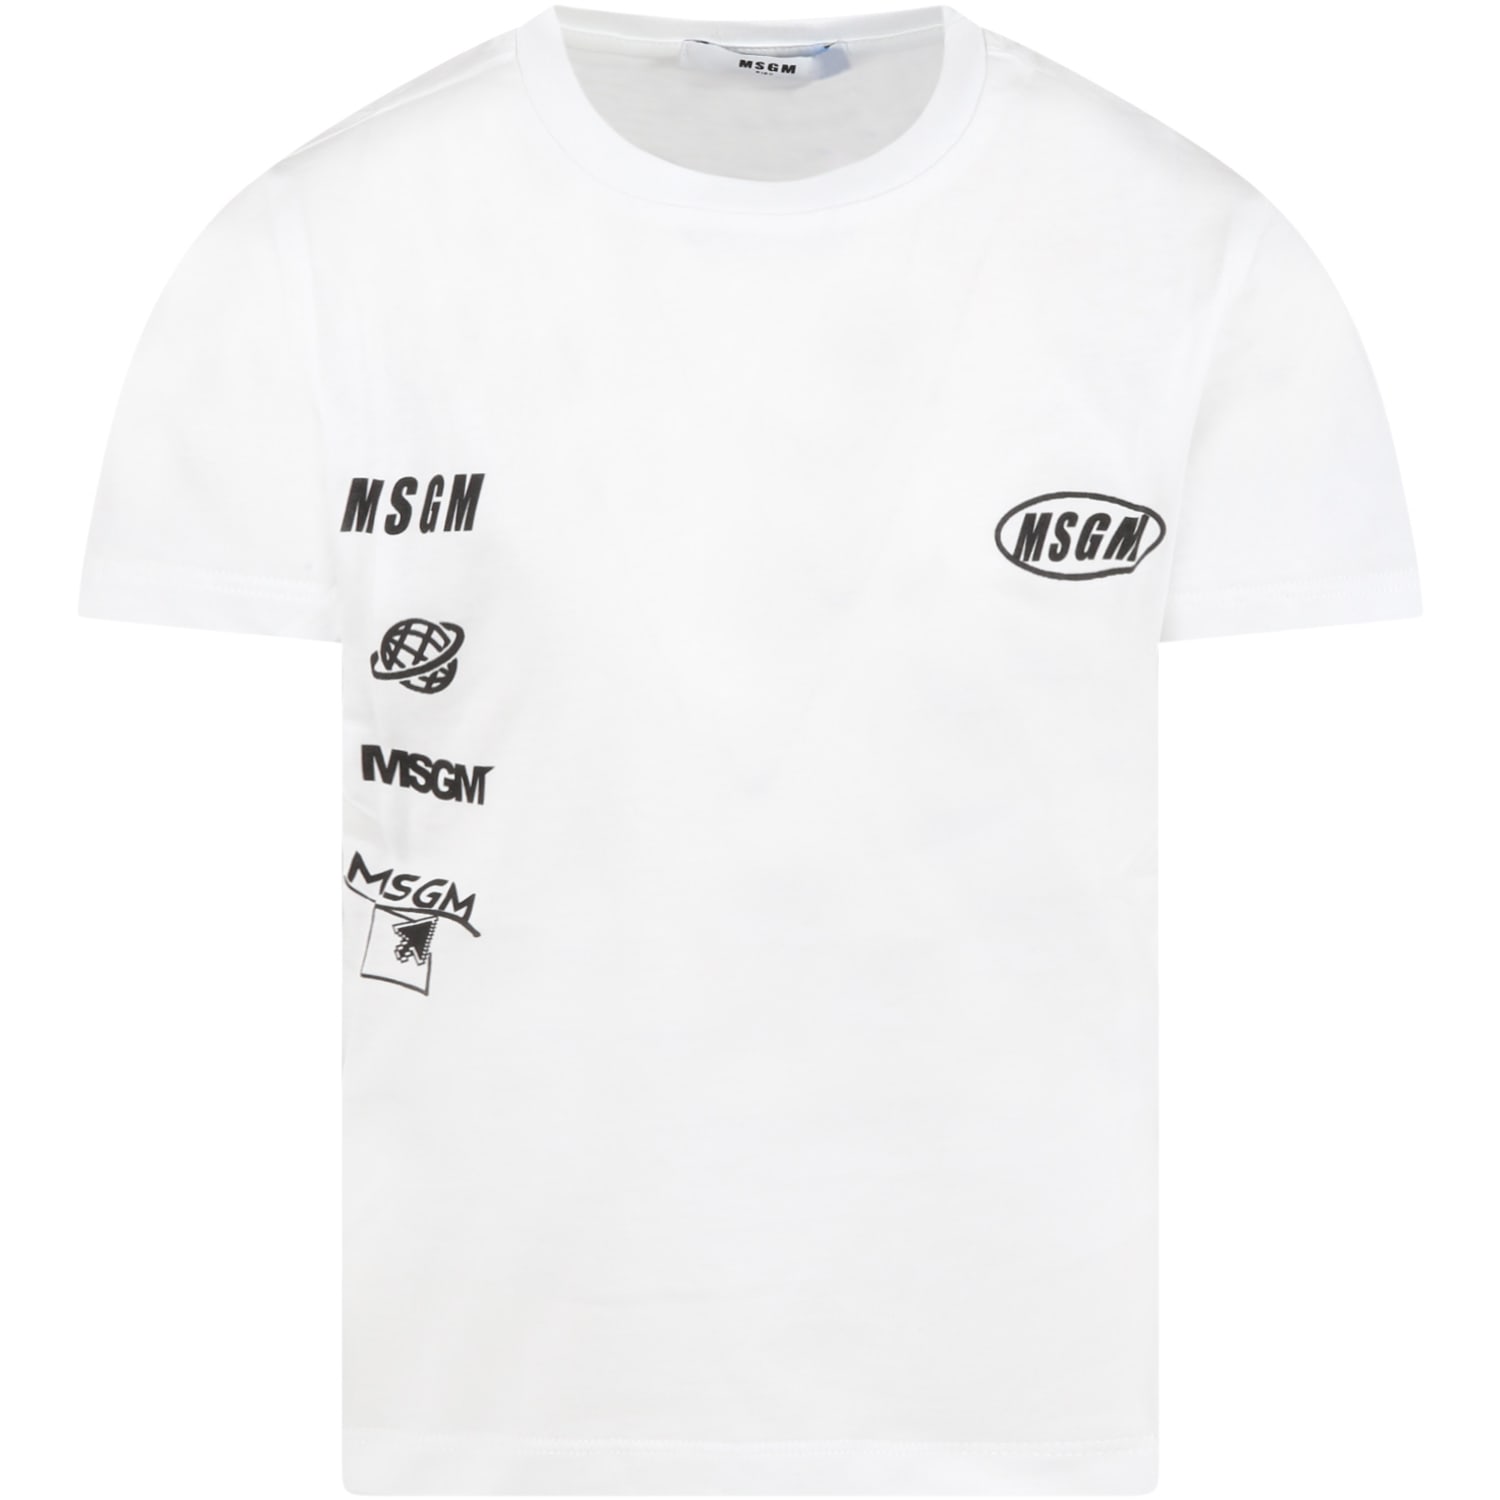 MSGM White T-shirt For Boy With Black Logos